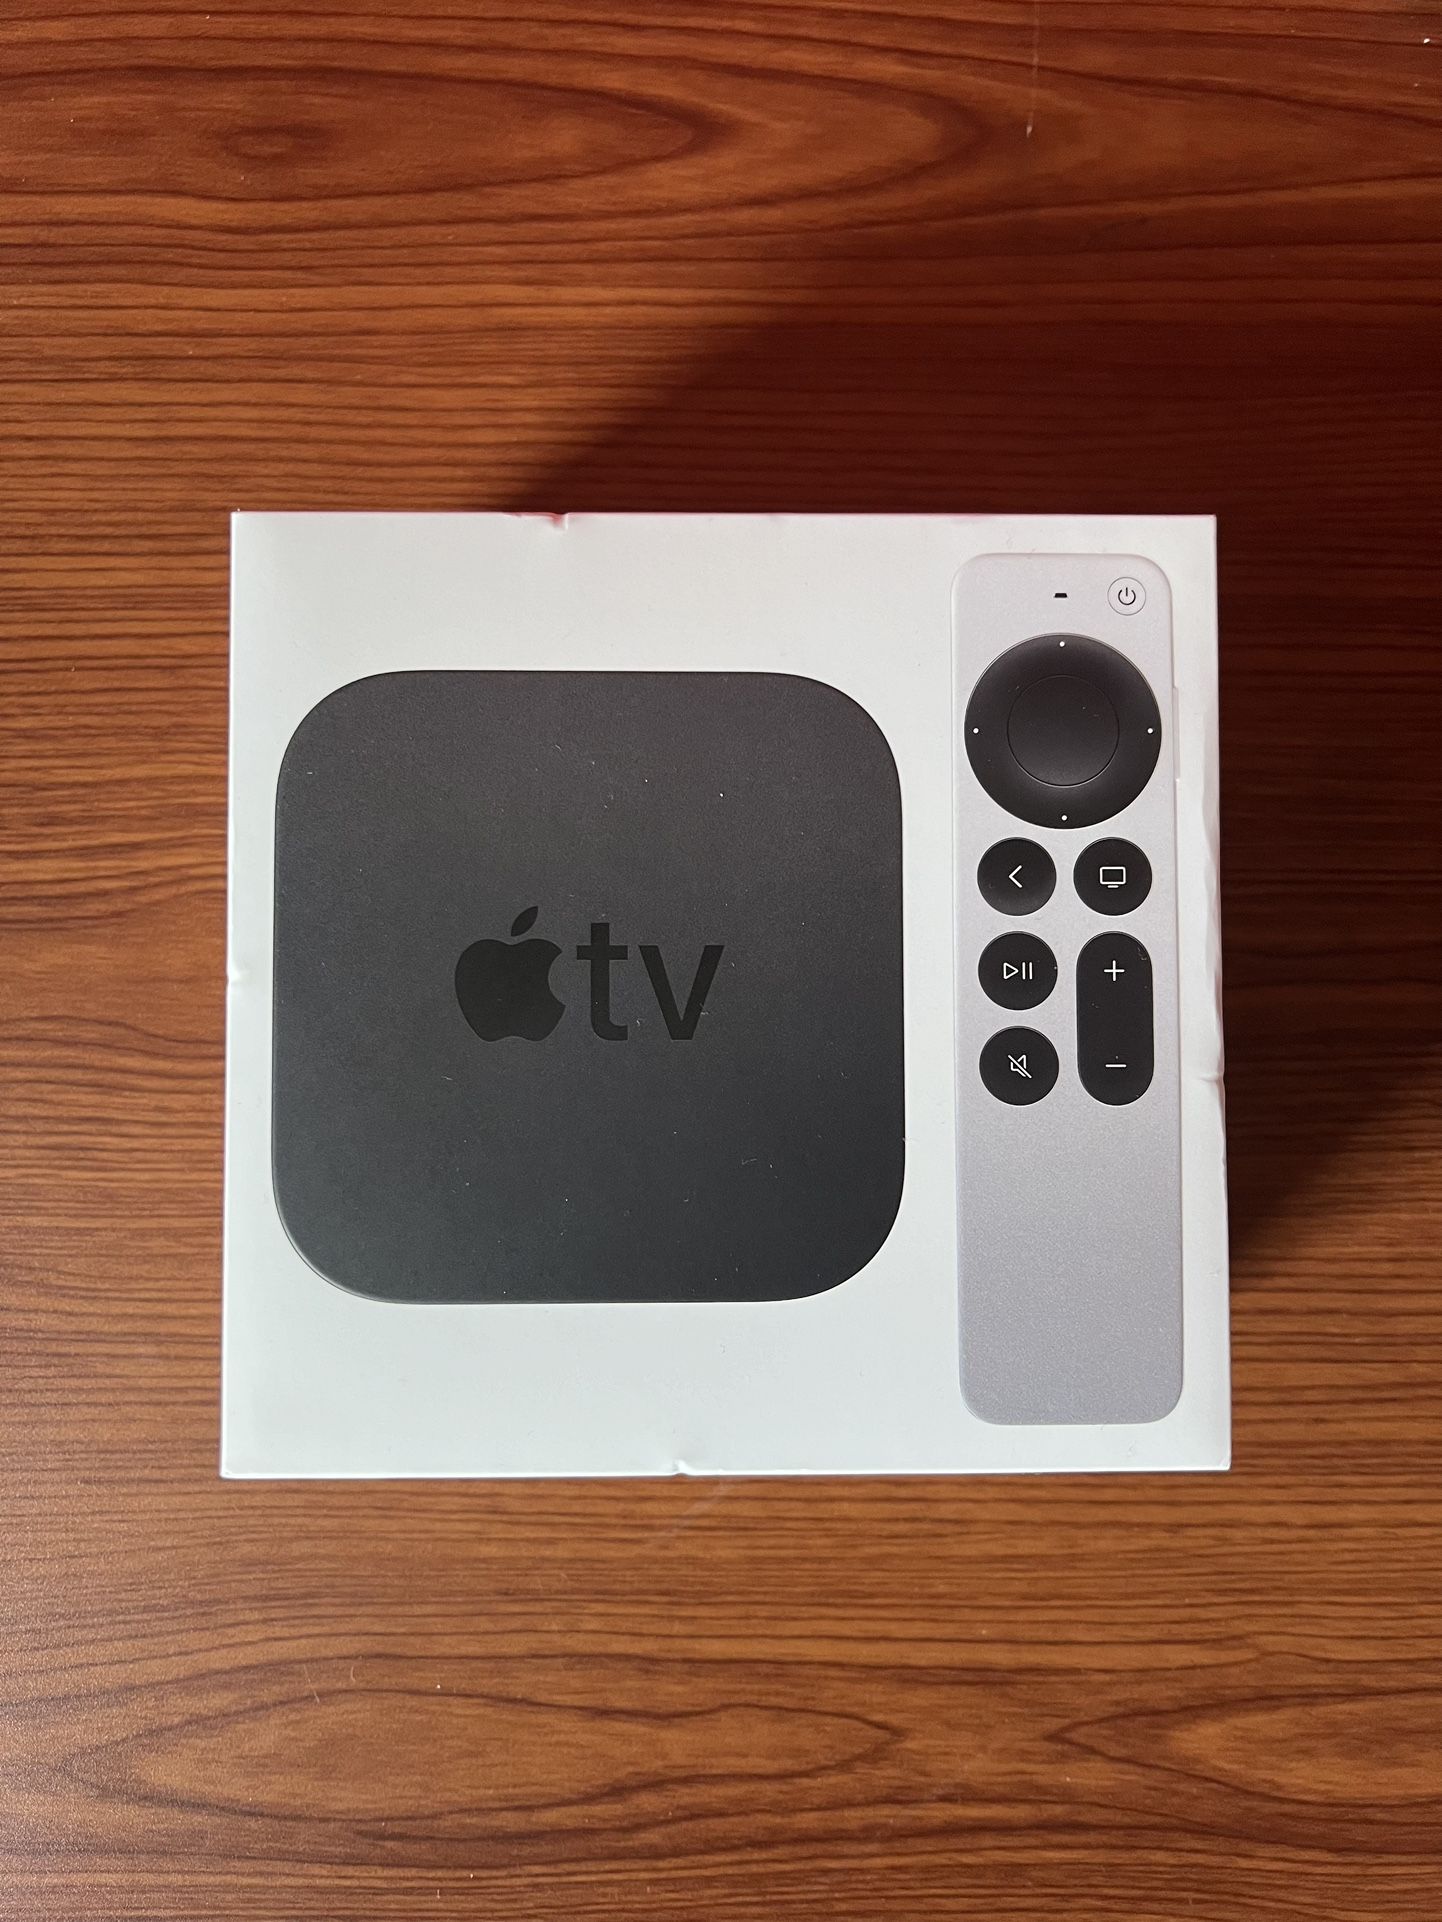 Apple TV 4K 2021 (Never used) 